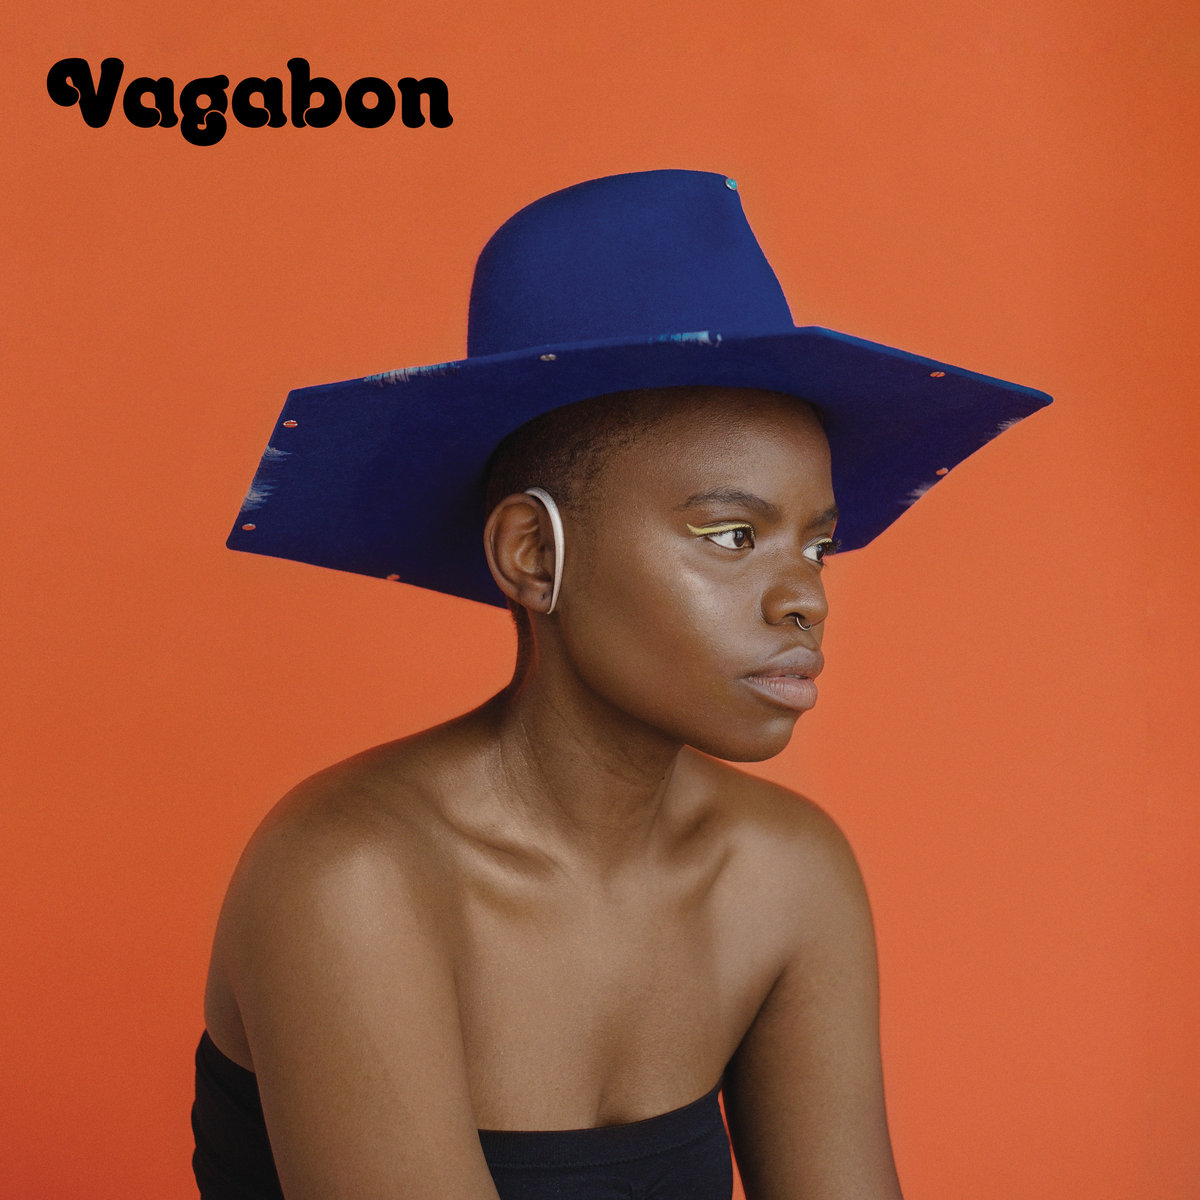 Image result for vagabon album cover